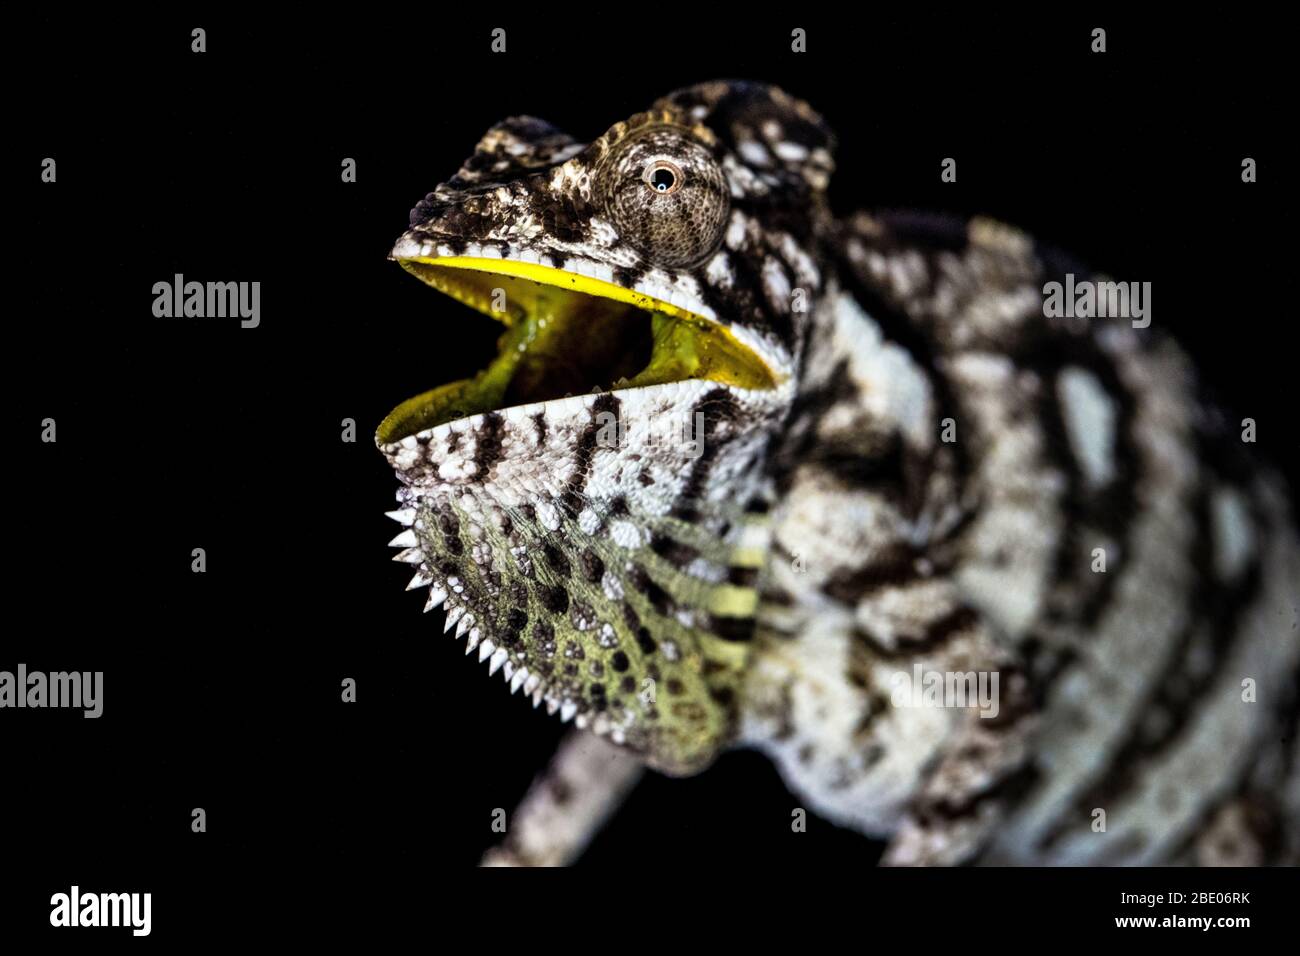 Close up of Labor's chameleon (Furcifer labordi ), Madagascar Stock Photo